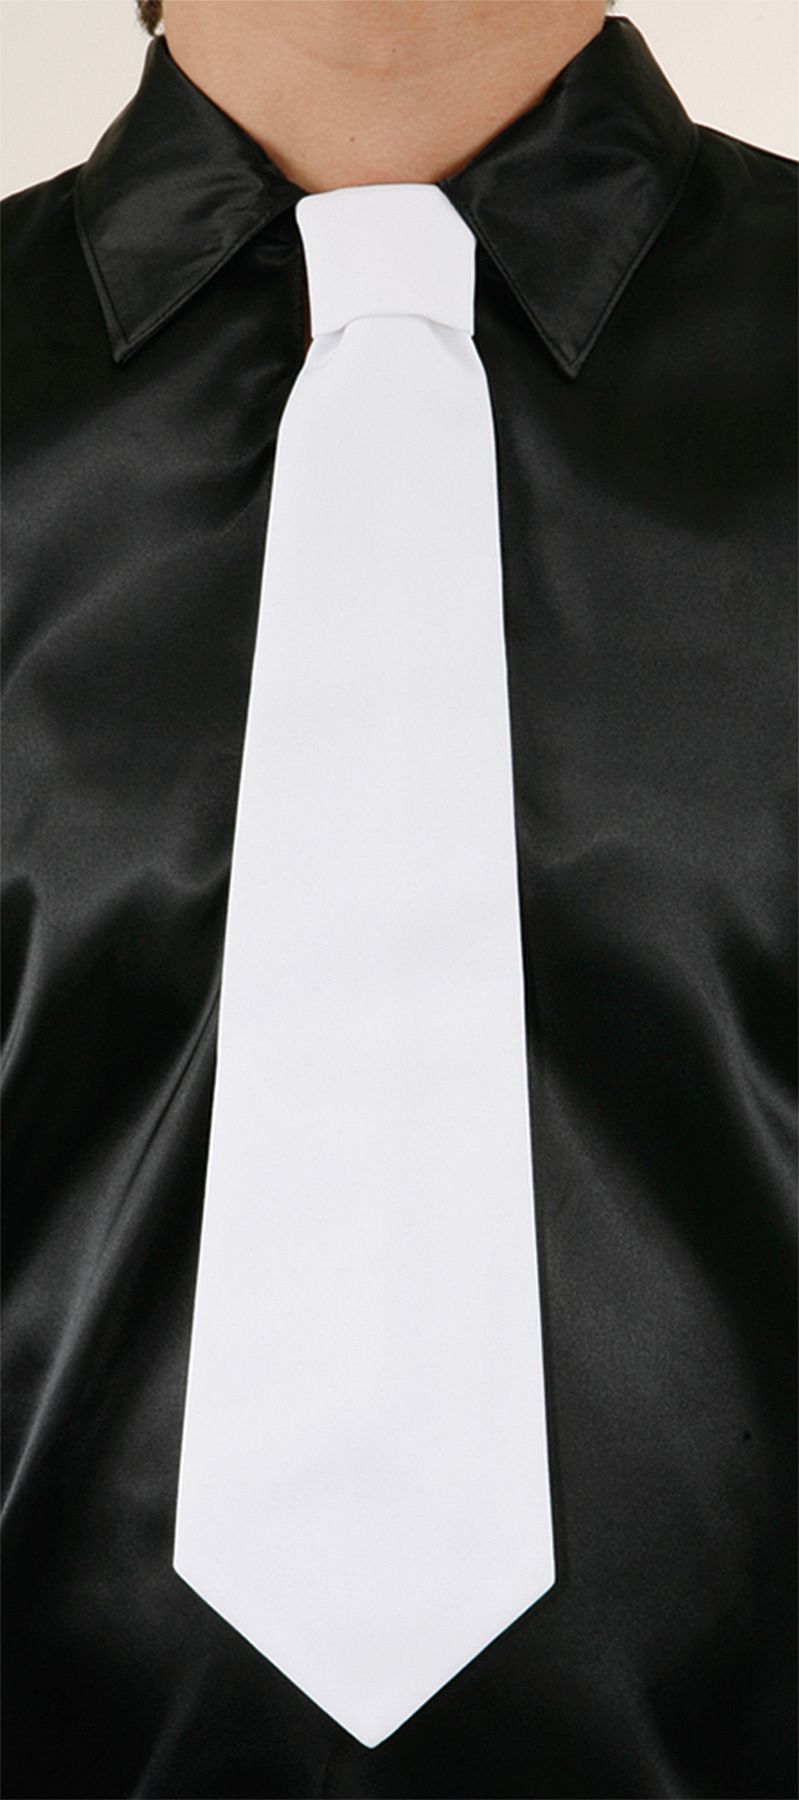 Tie, white